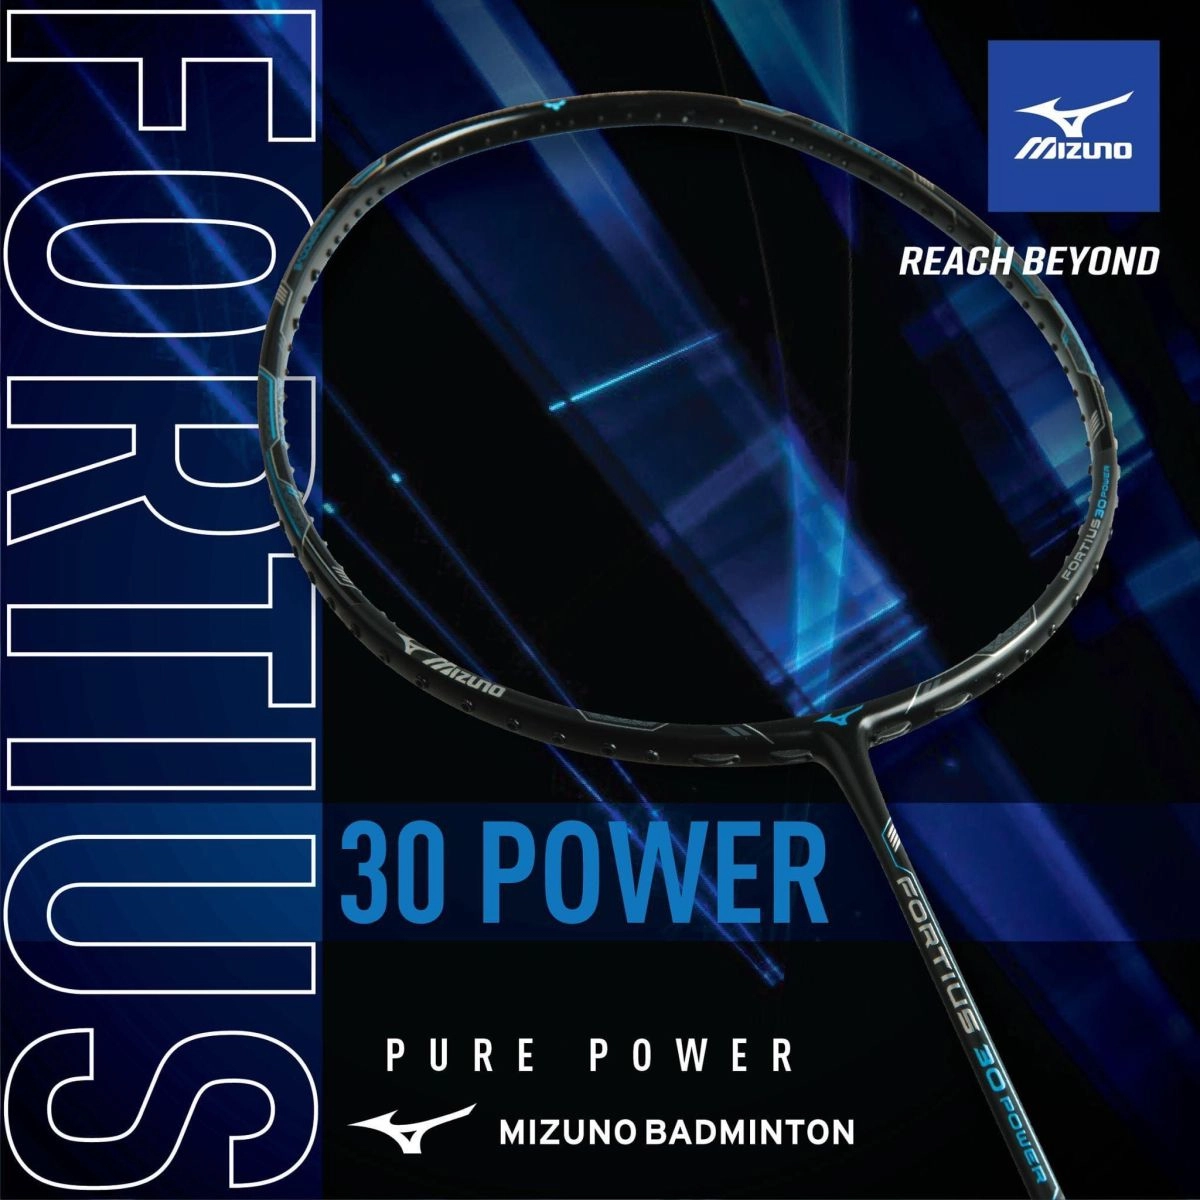 vợt cầu lông mizuno cao cấp fotius 30 power